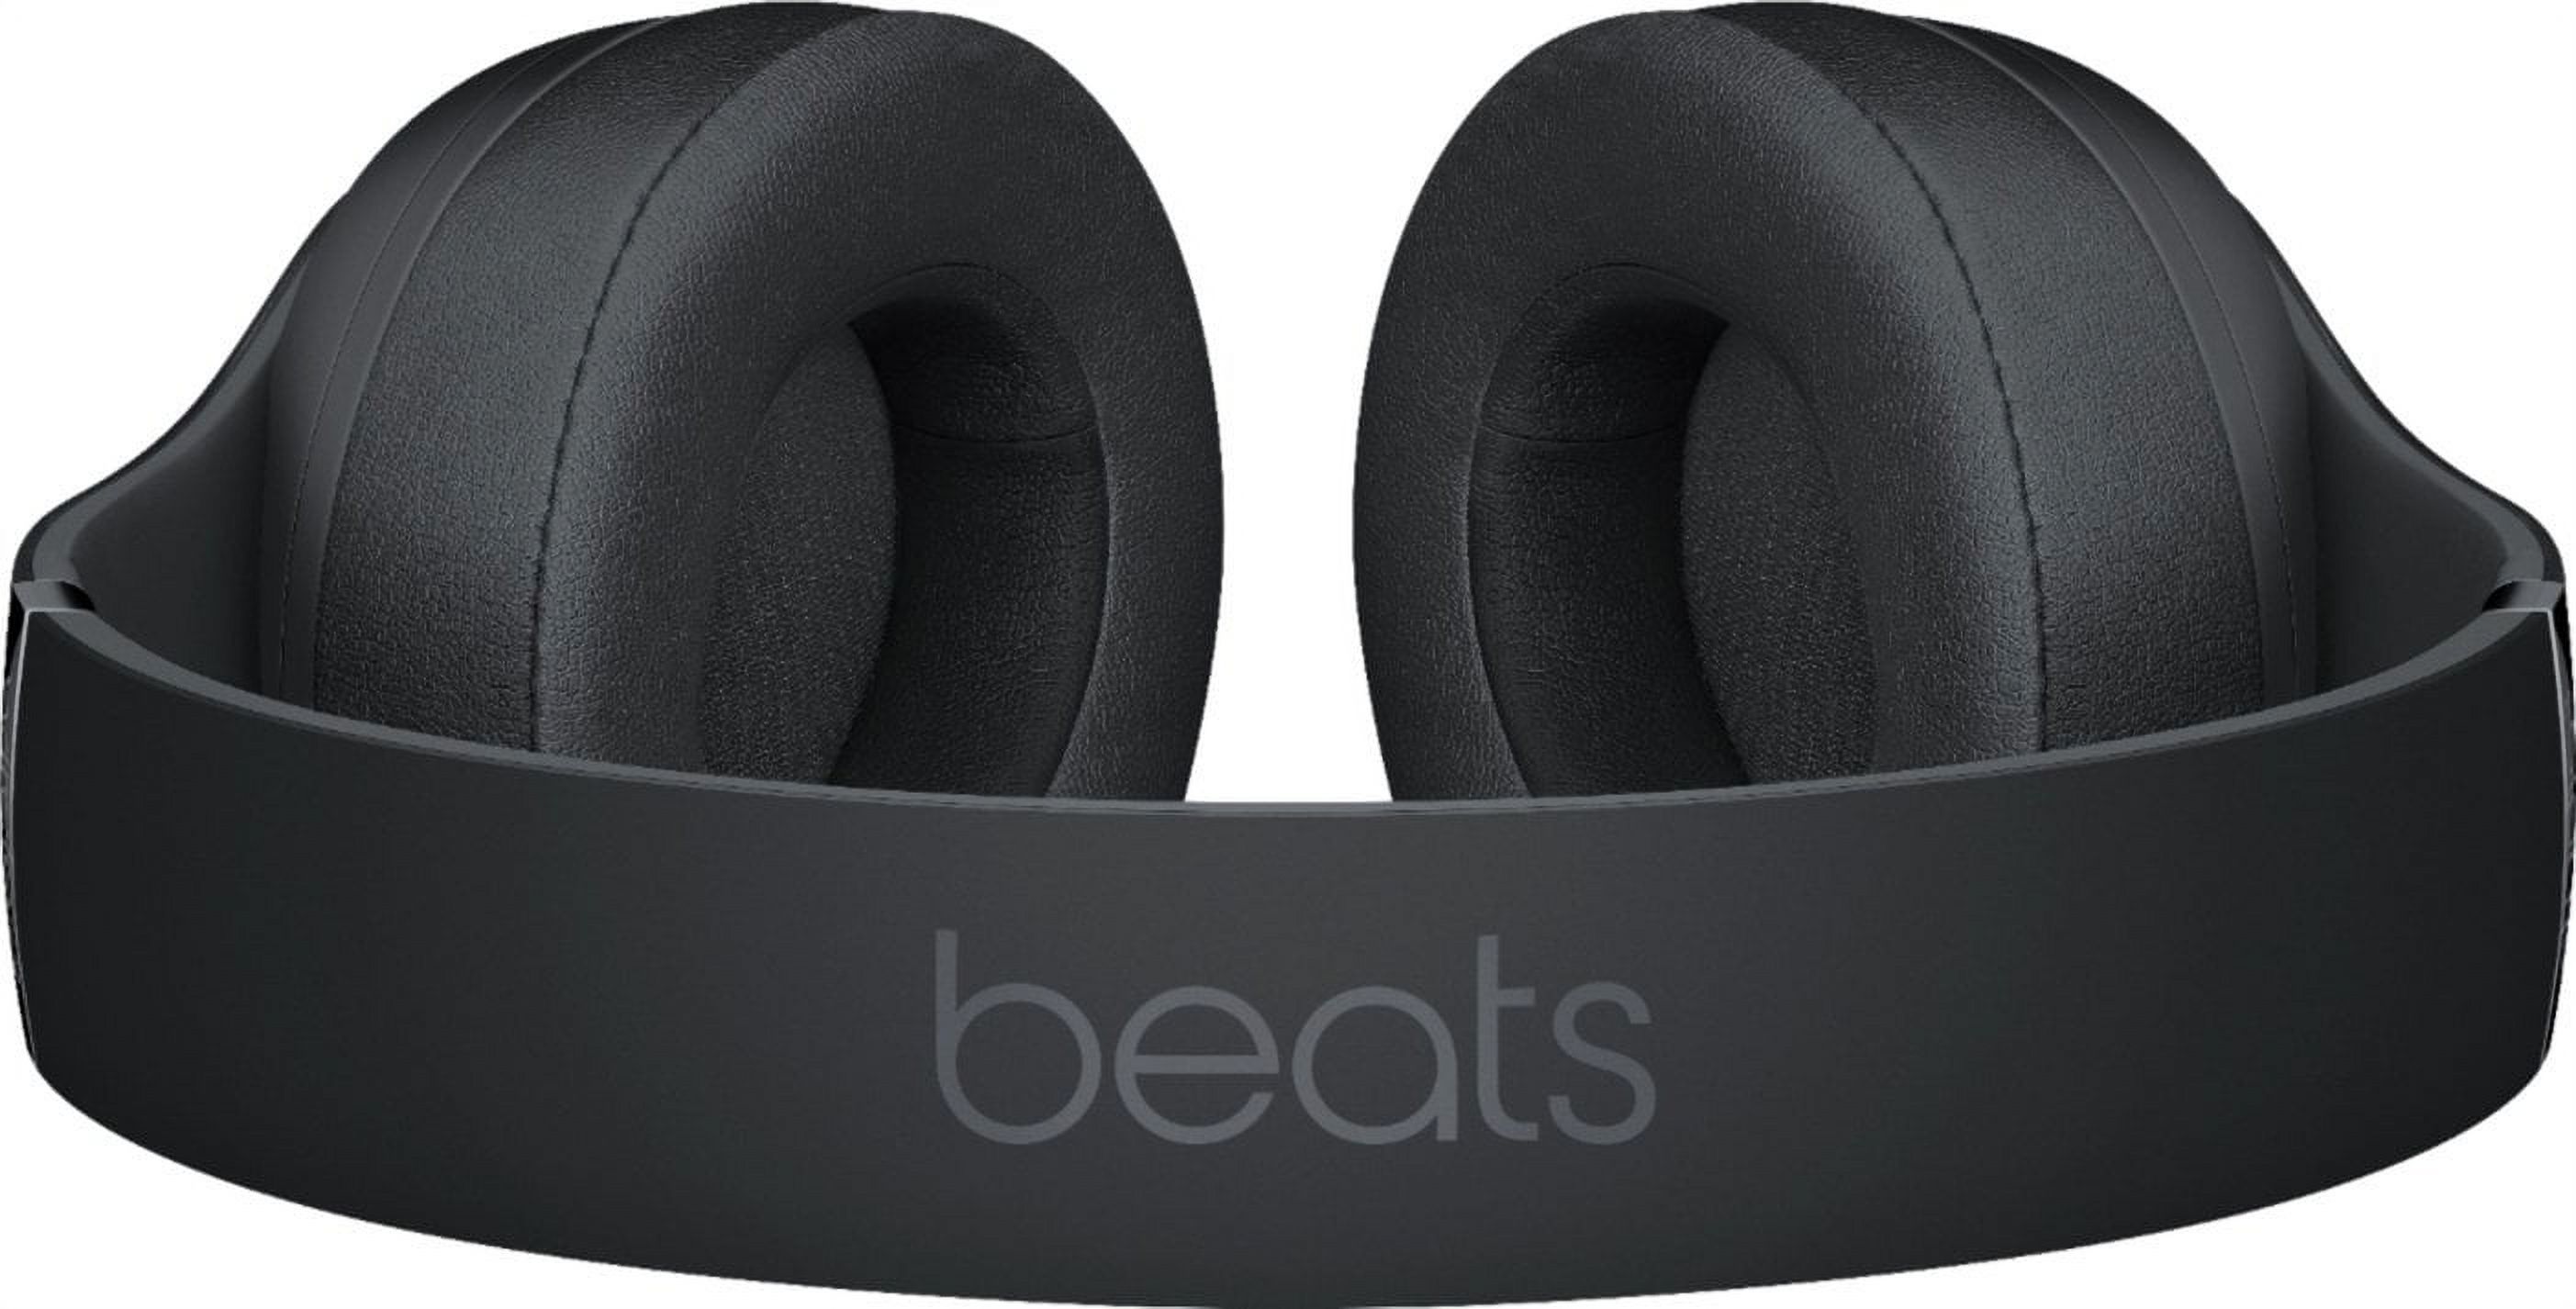 Beats Studio3 Wireless Noise Cancelling Headphones with Apple W1 Headphone Chip- Matte Black - image 5 of 5